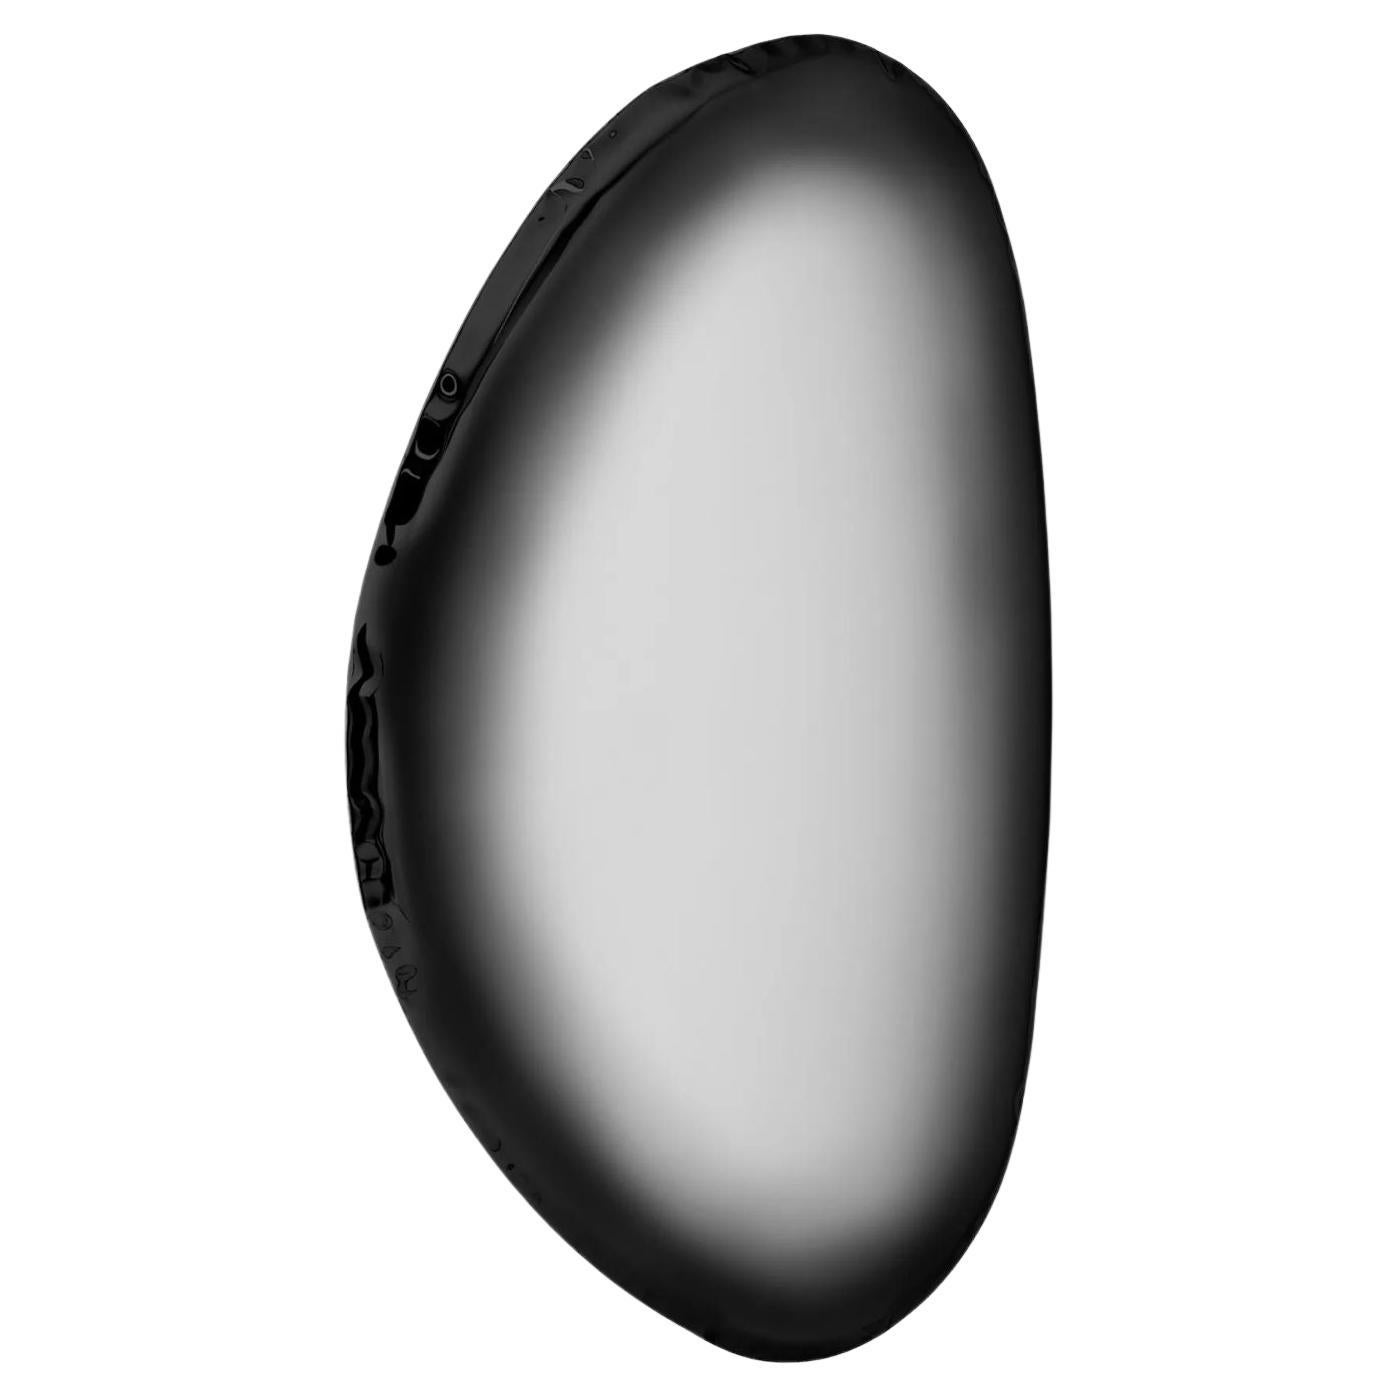 Dark Matter Tafla O2 Wall Mirror by Zieta For Sale